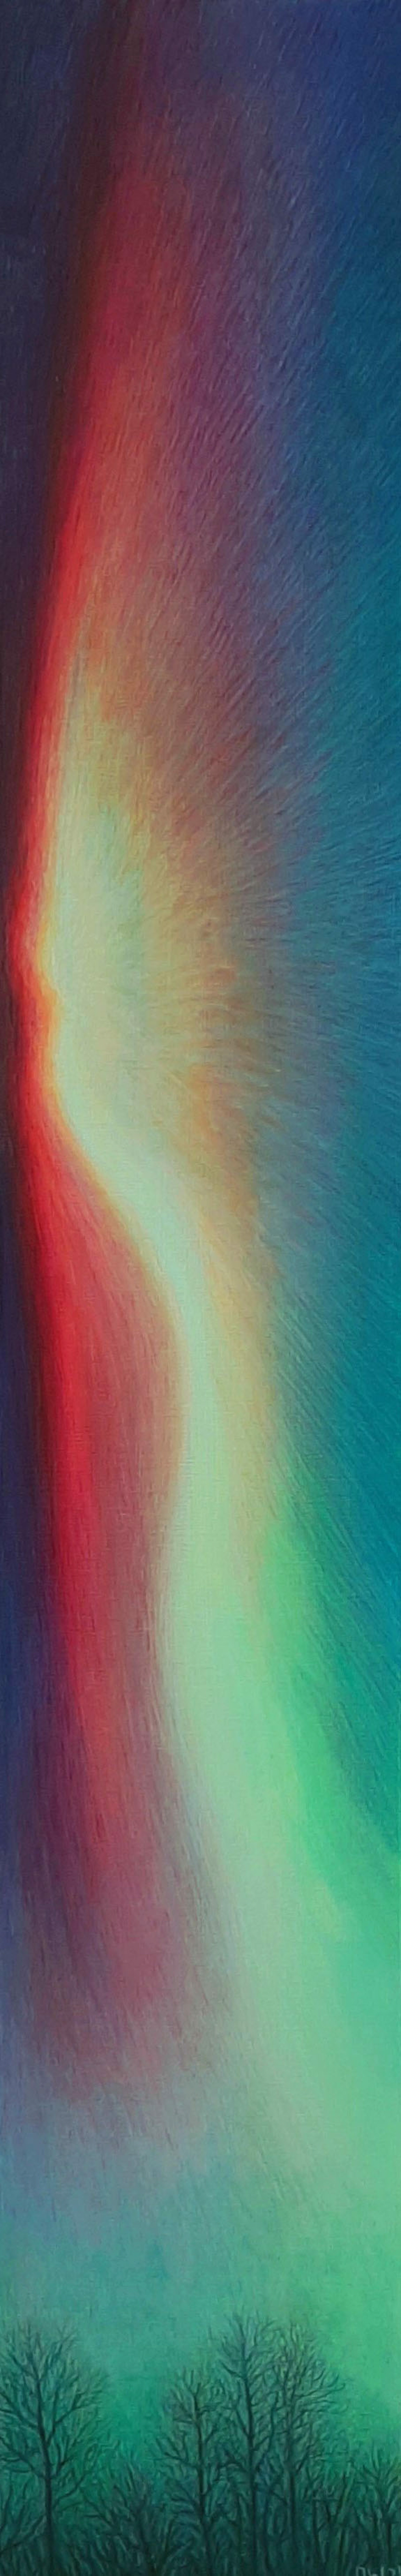 Aurora Borealis by Debbie Wozniak-Bonk